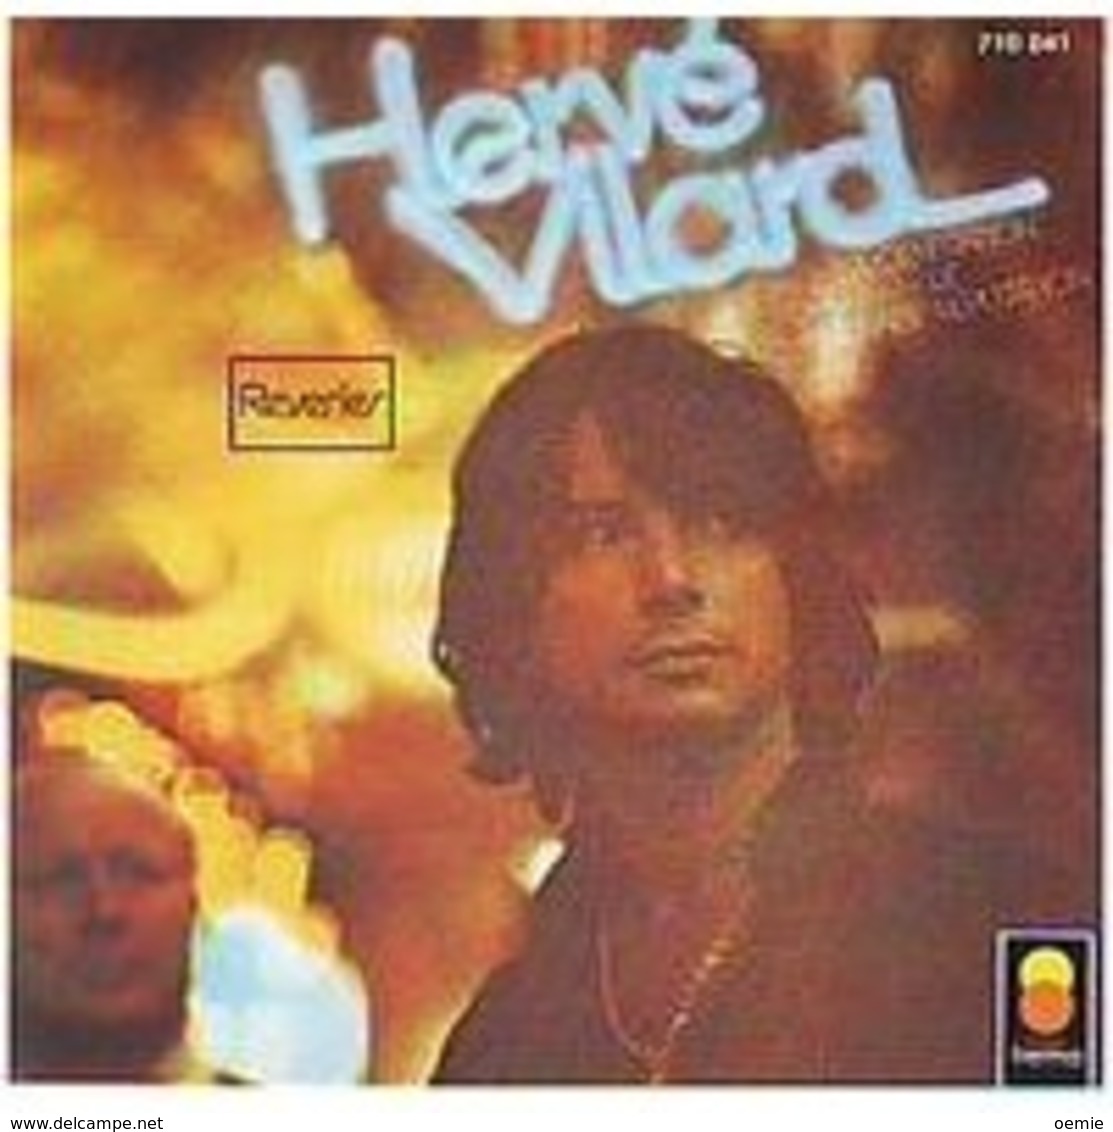 HERVE  VILARD   ° COLLECTION DE 5 CD   3 ALBUMS ET 2 SINGLES - Vollständige Sammlungen